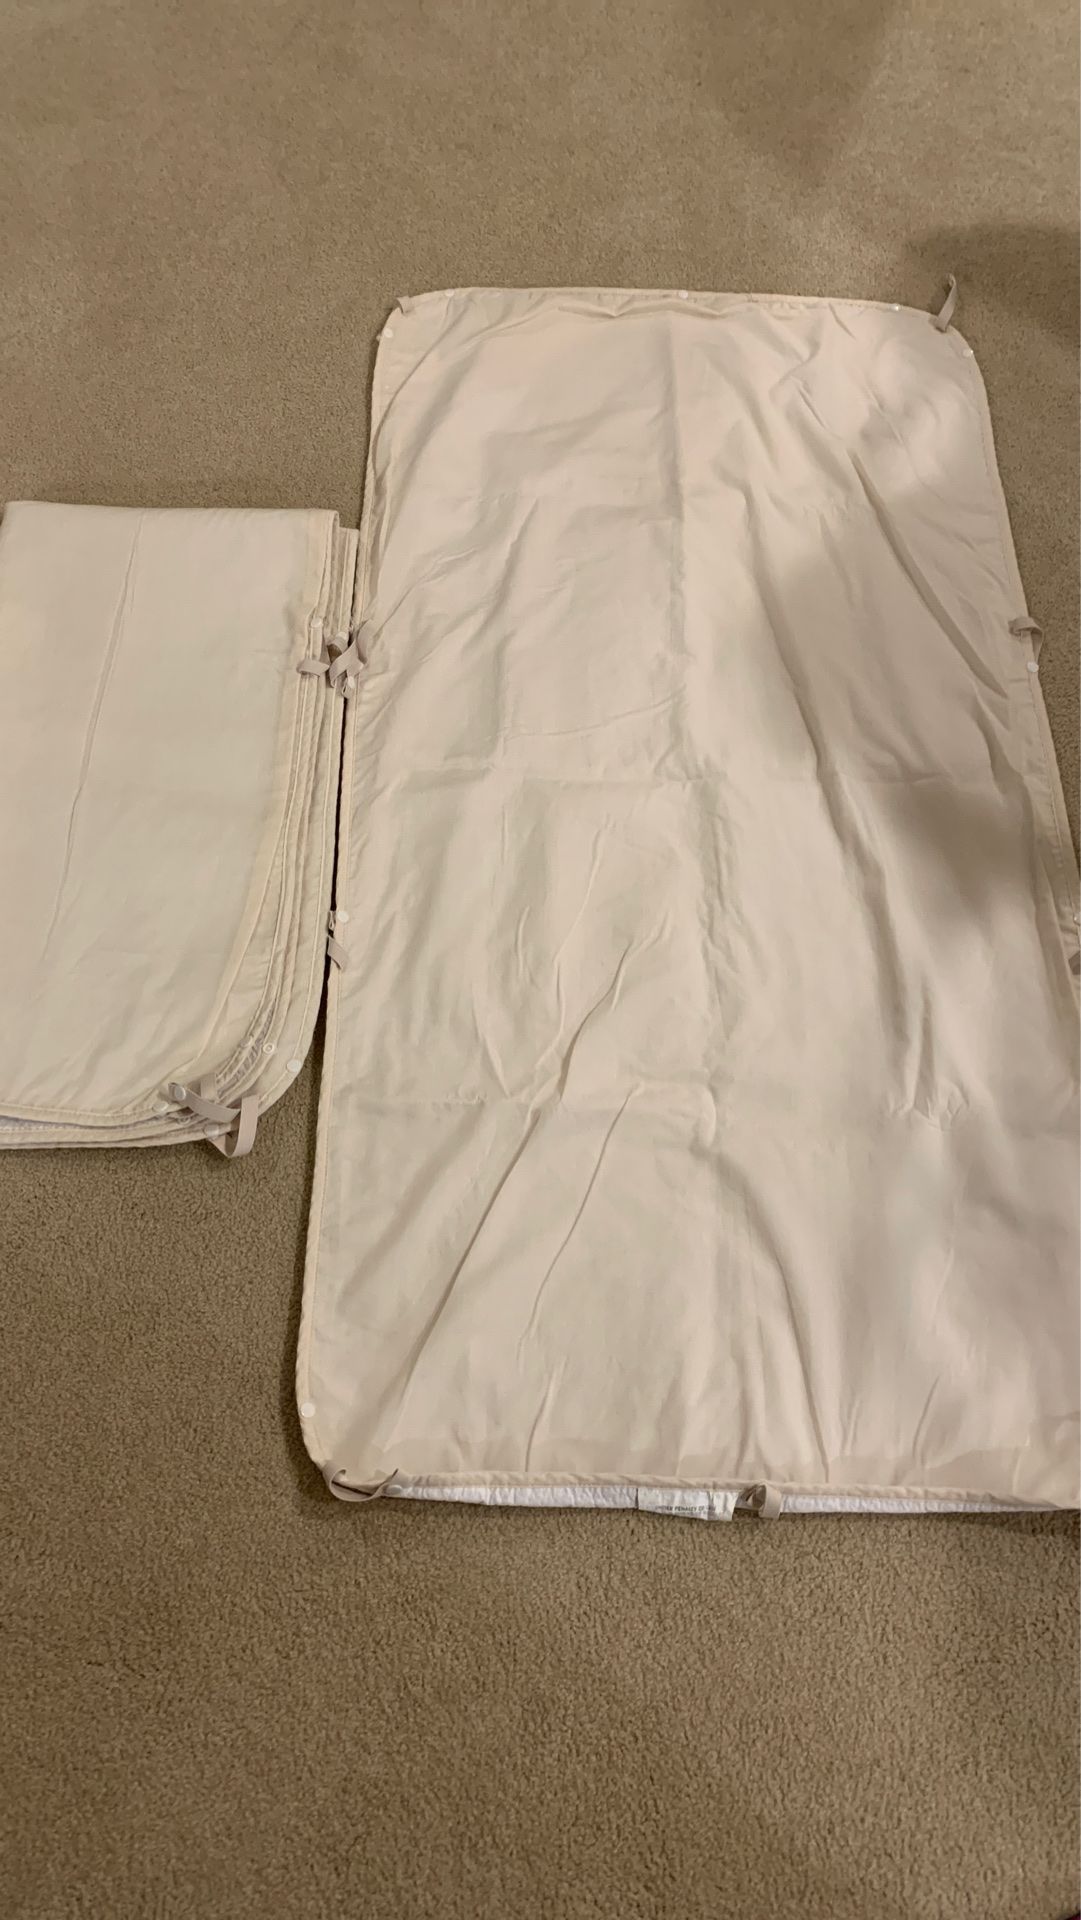 Crib waterproof mattress protectors